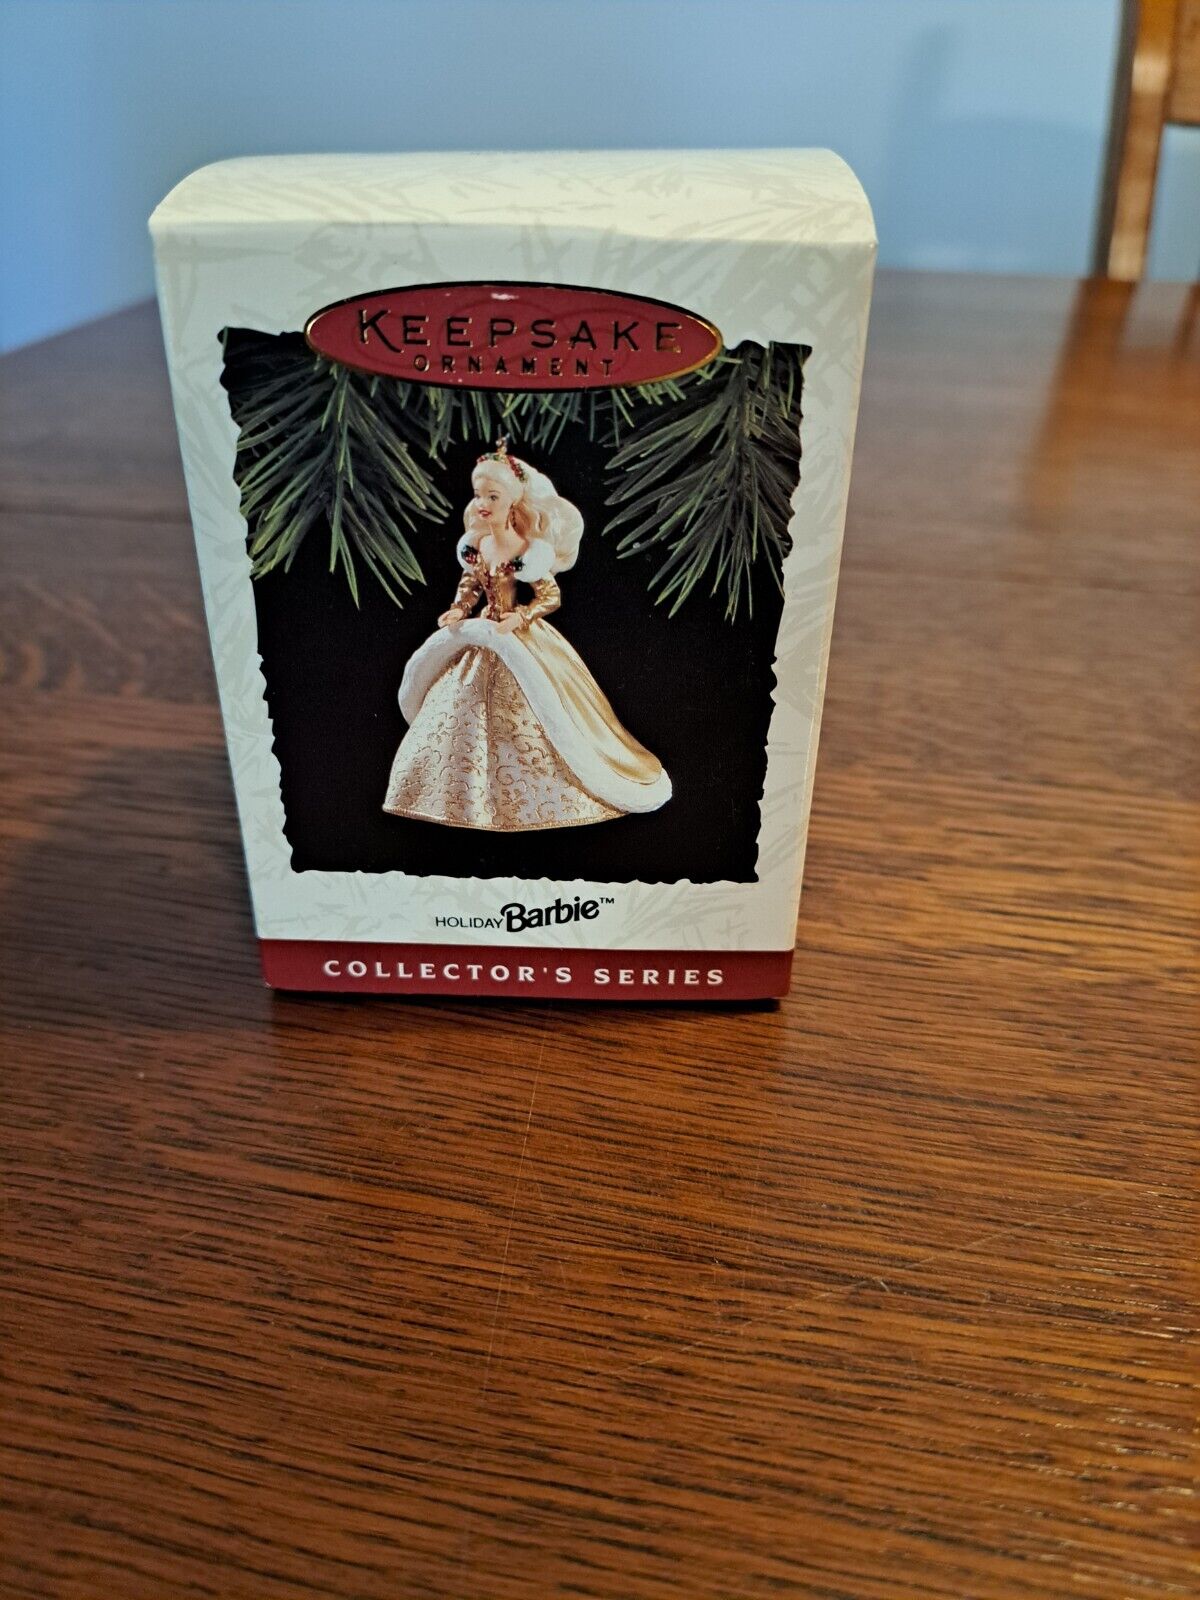 1994 Hallmark Keepsake Ornament Holiday Barbie Collector's Series 2nd in Series